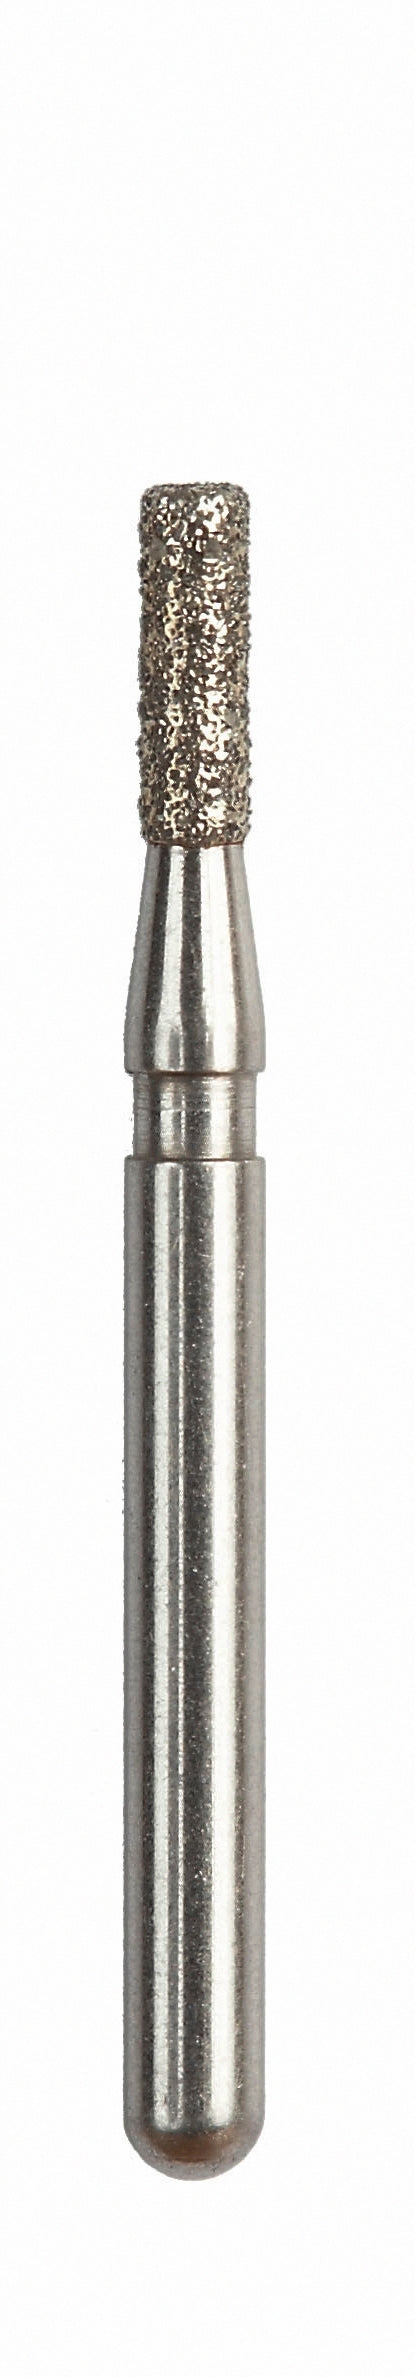 835012 Medium - Flat End Cylinder - Cavity Prep Bur - Diamond Coated (Pack of 6)